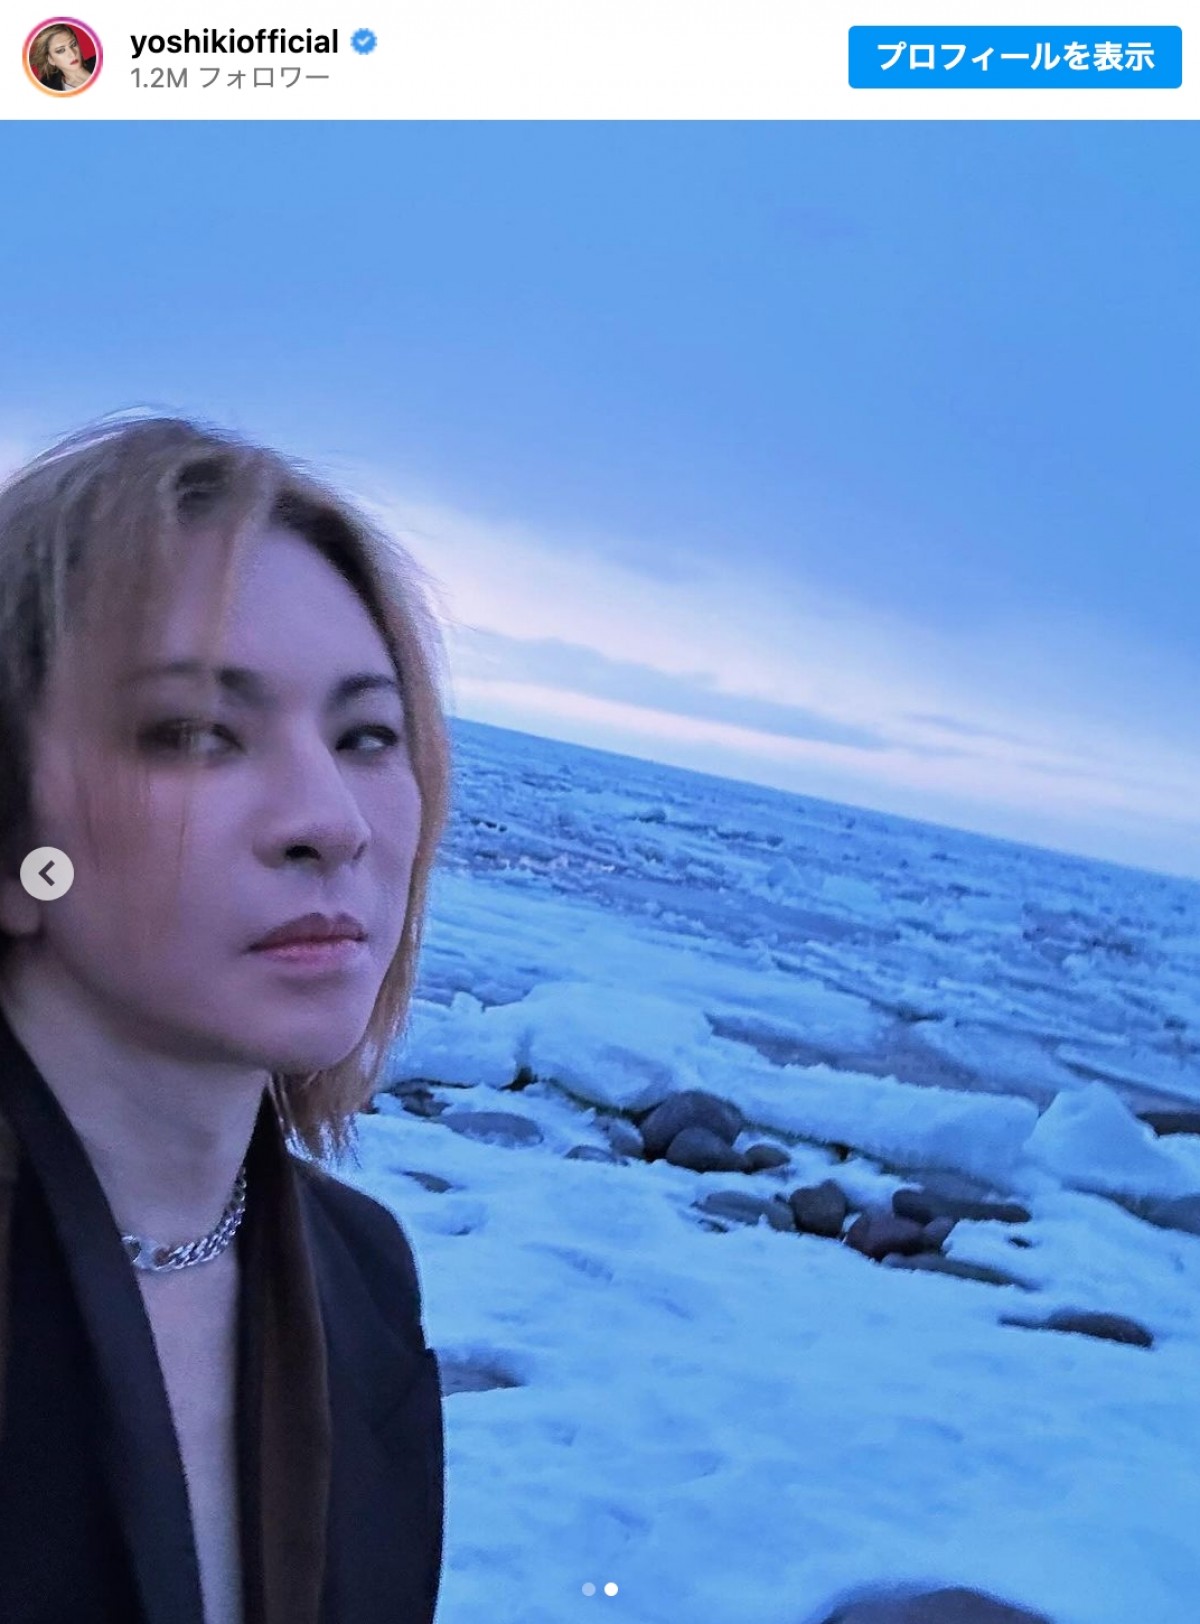 YOSHIKI、流氷の上に立つ姿に「エレガントで美しい」と反響